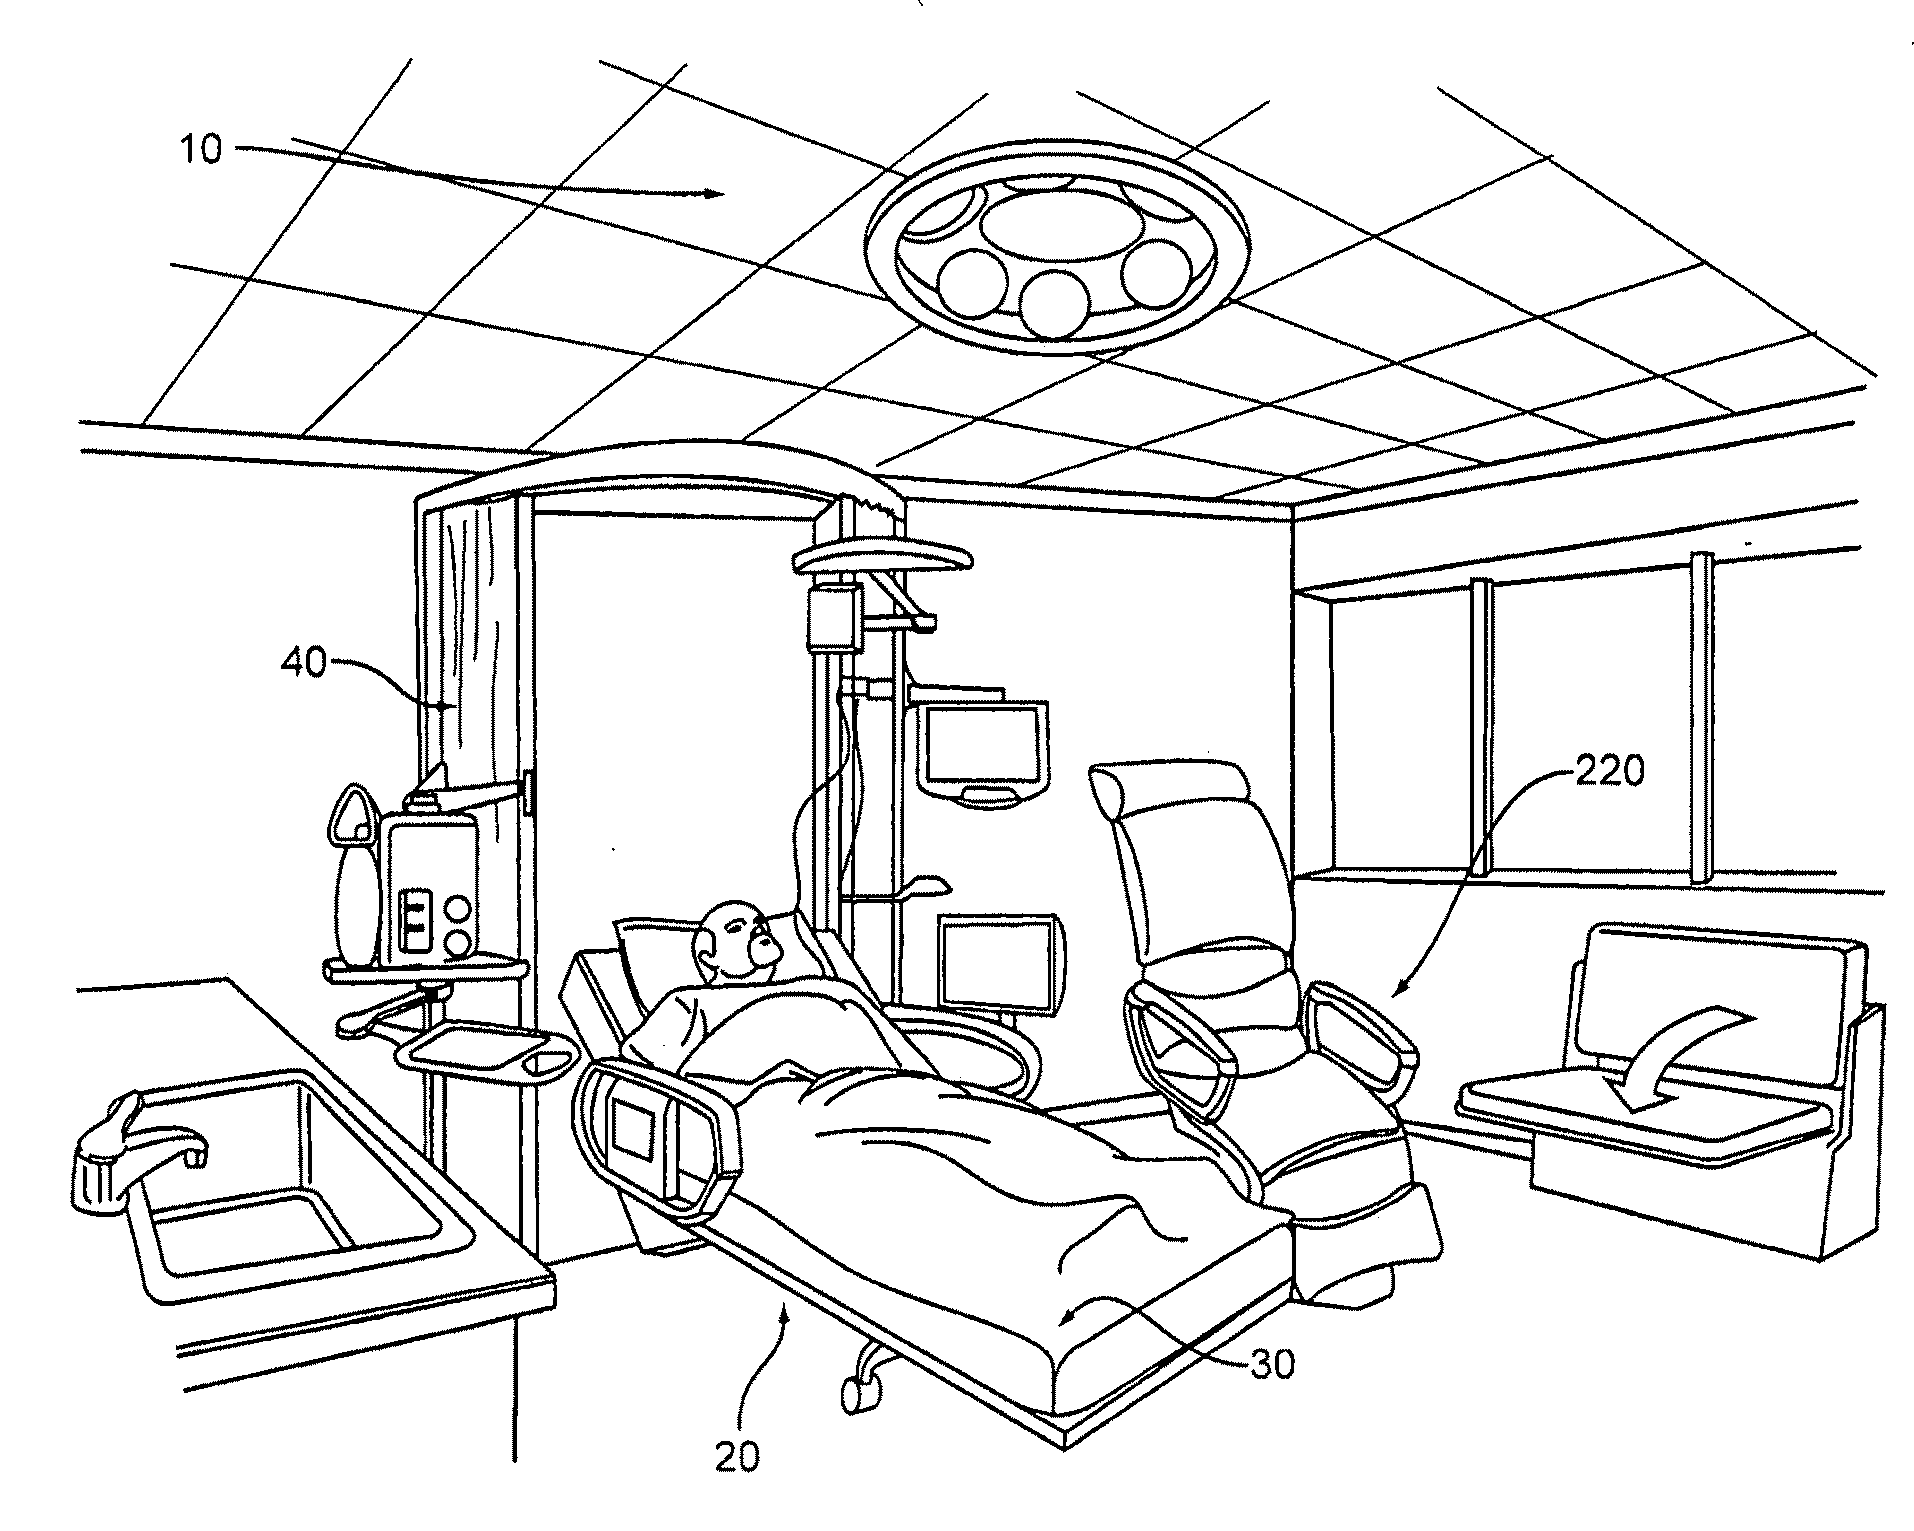 Integrated patient room